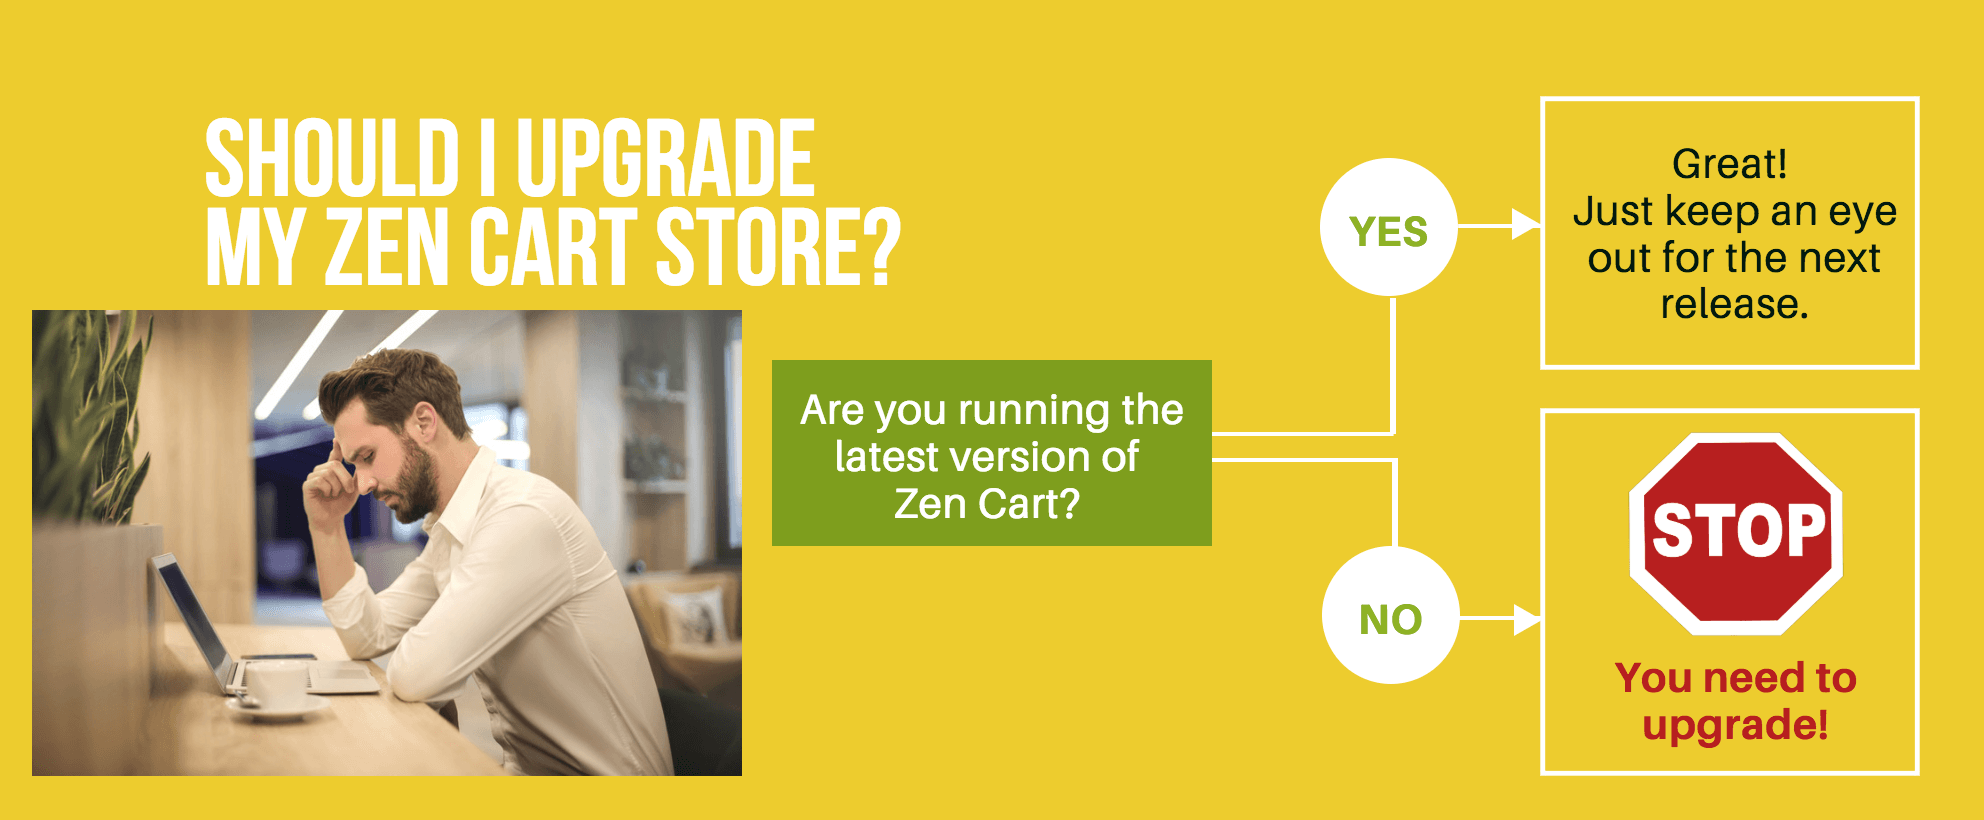 Should I upgrade Zen Cart?